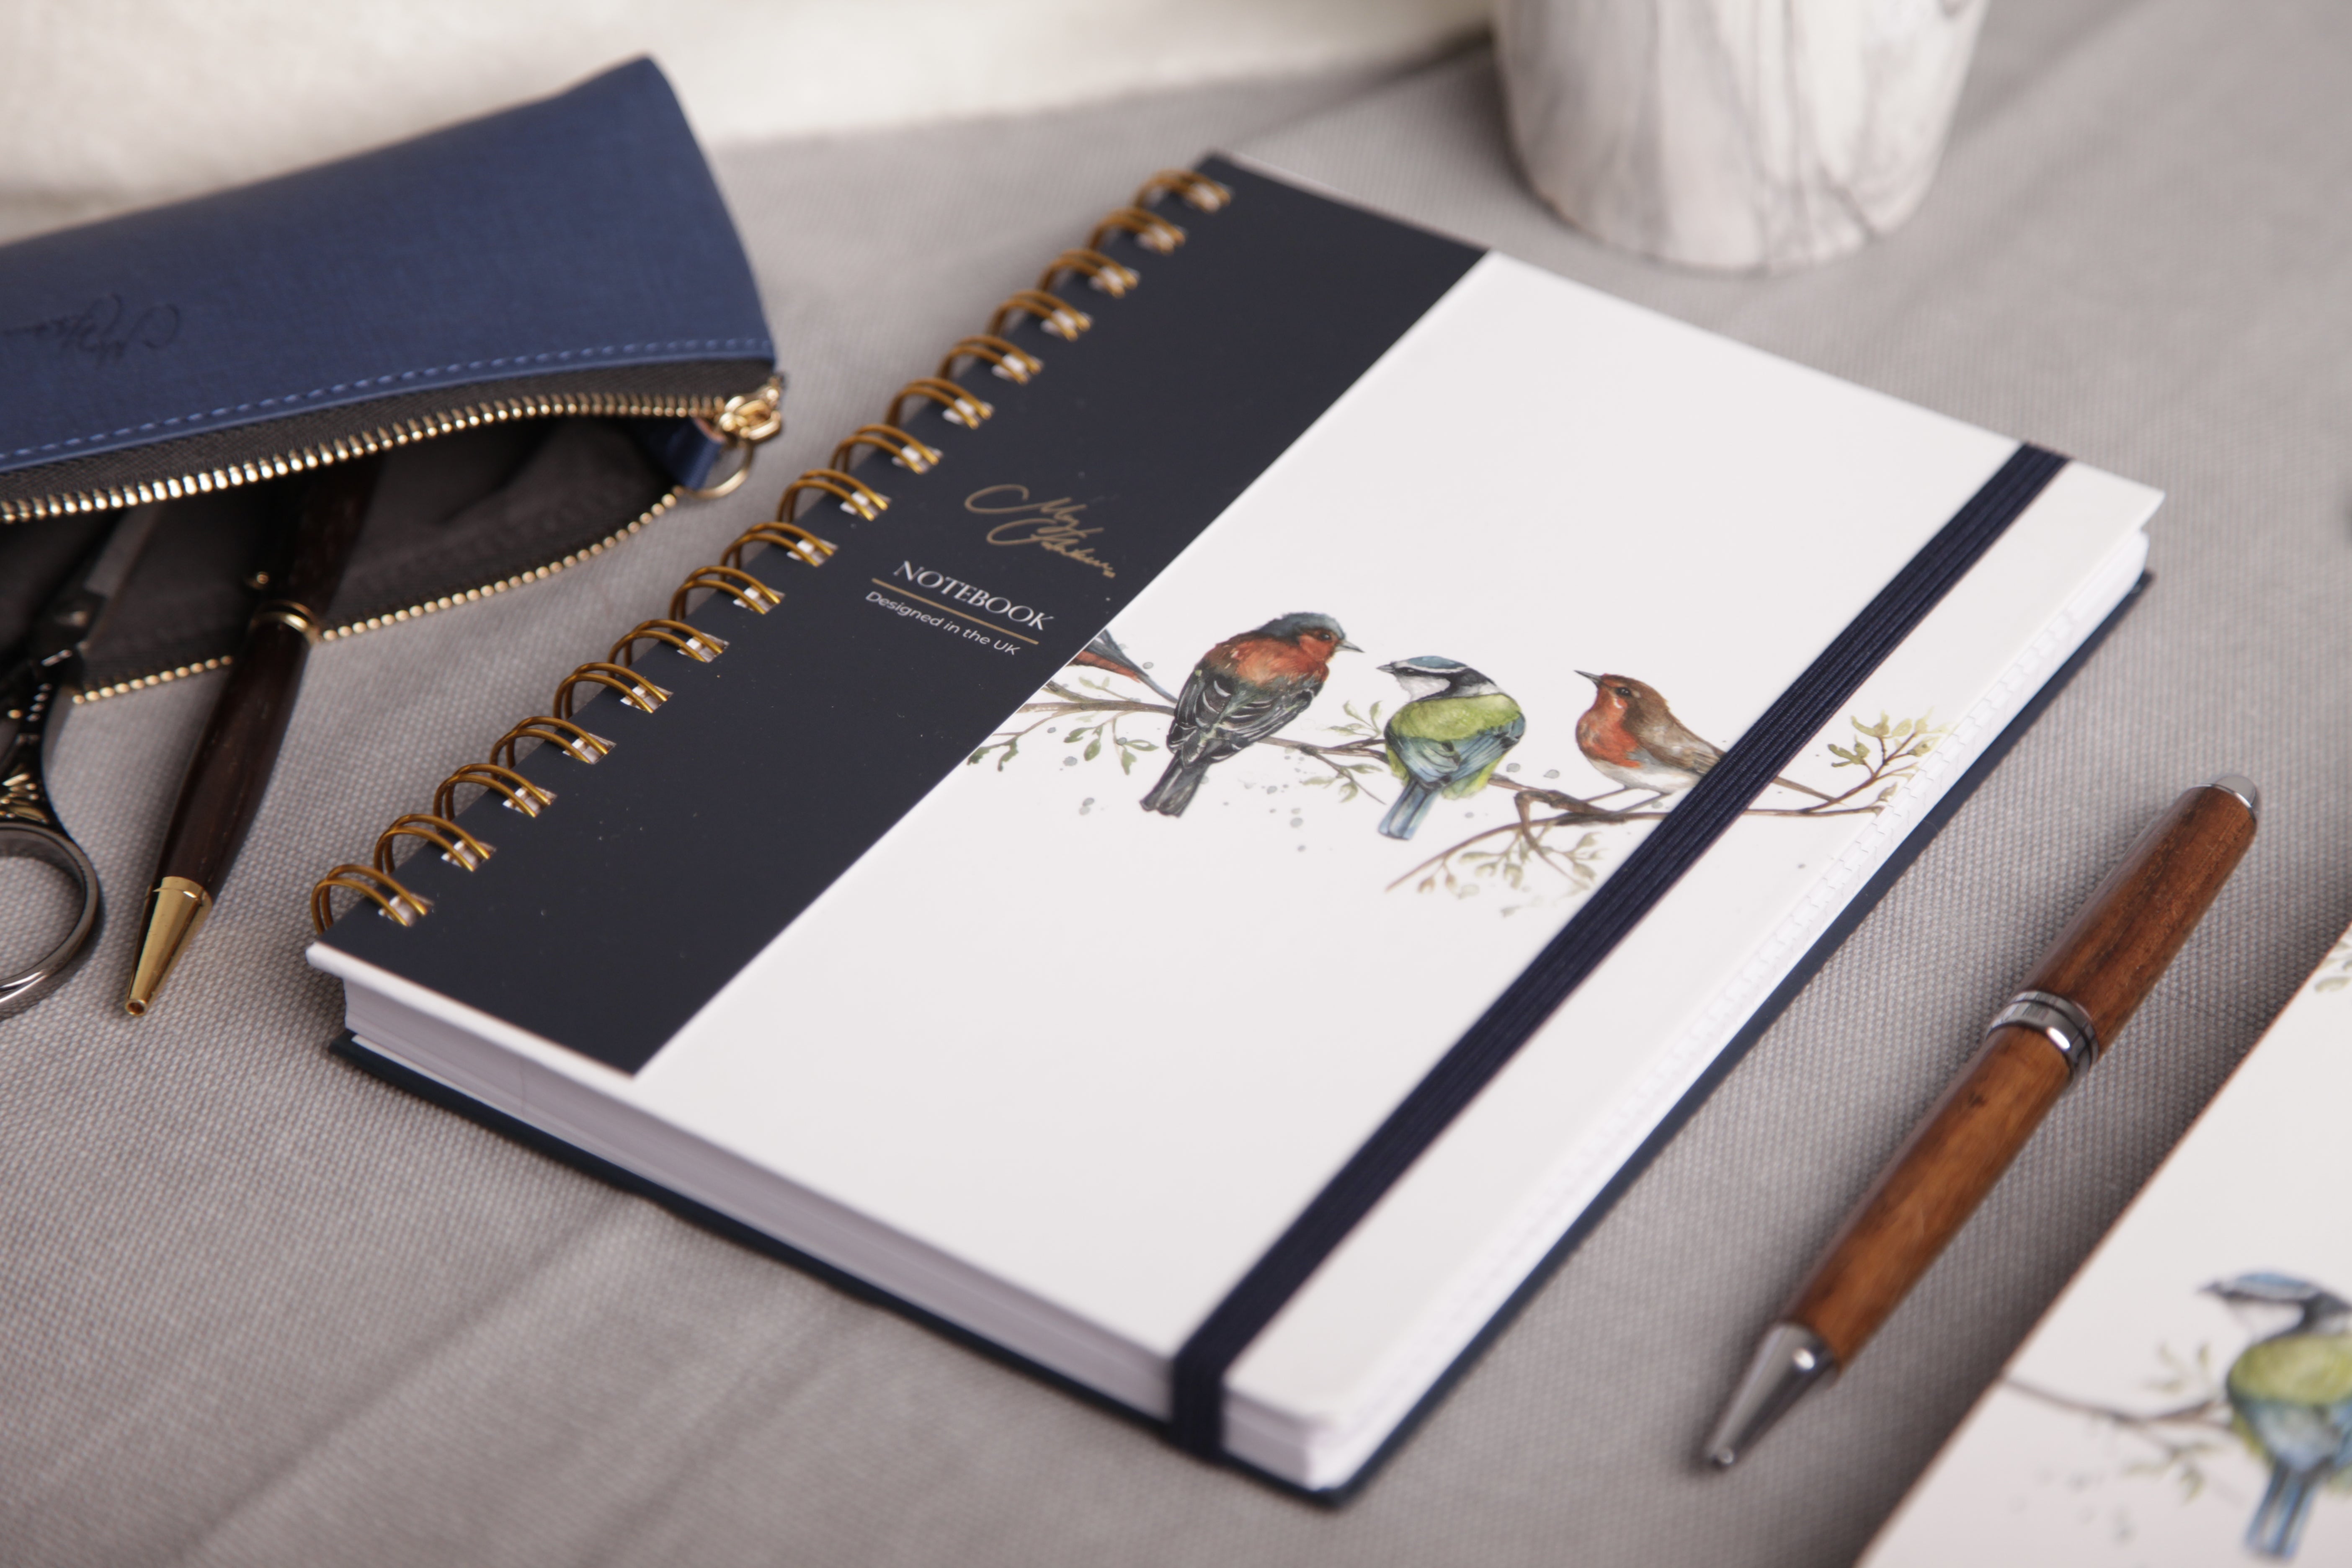 The Lookout' British Birds Watercolour Design A5 Notebook